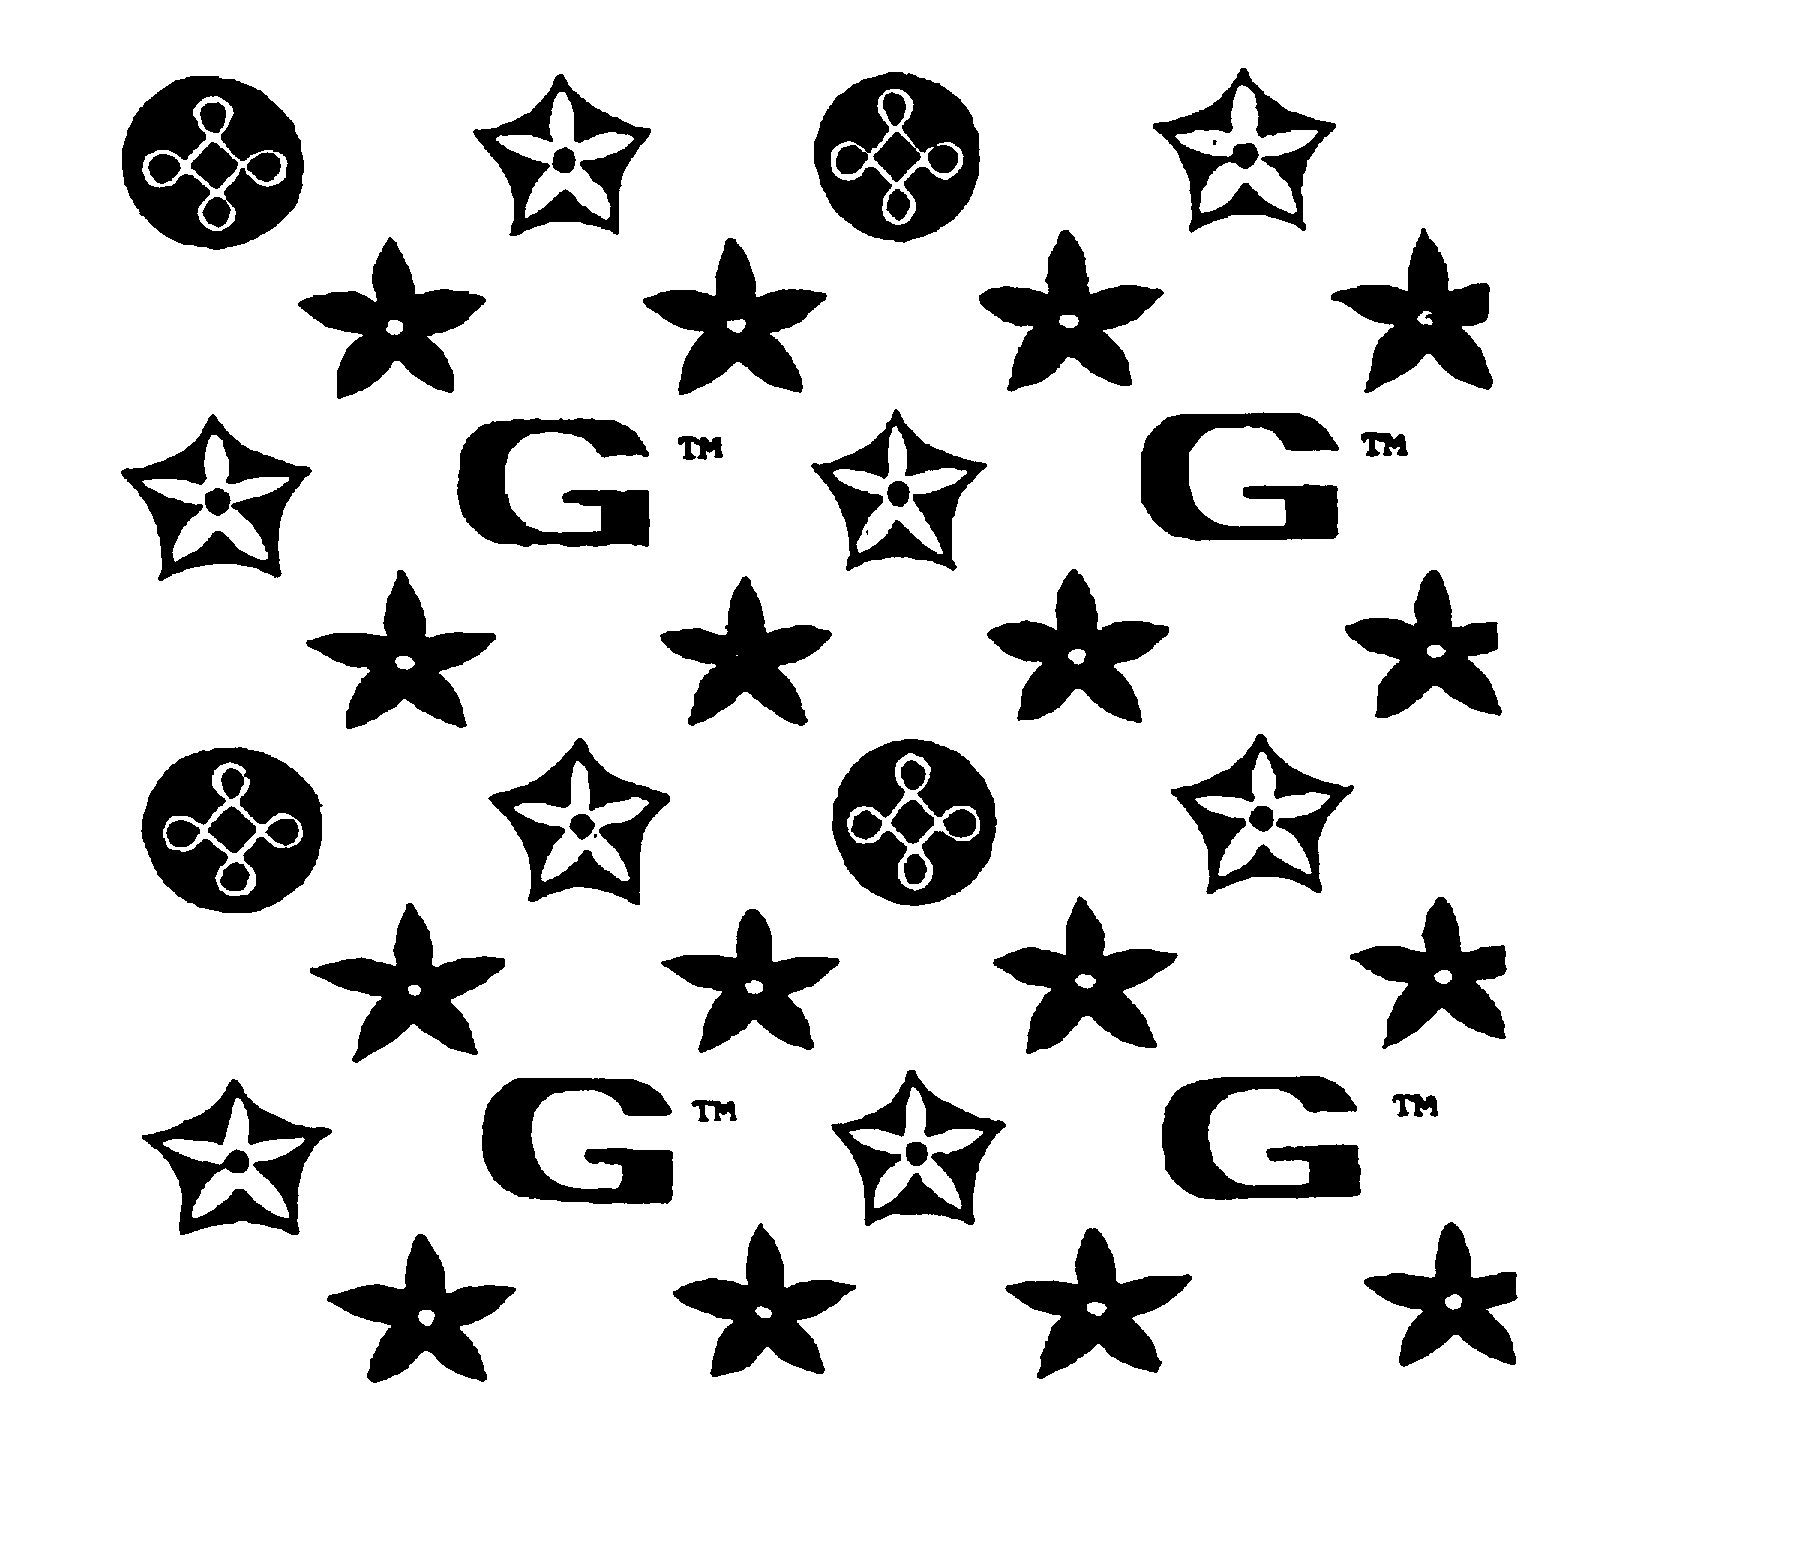 G G G G